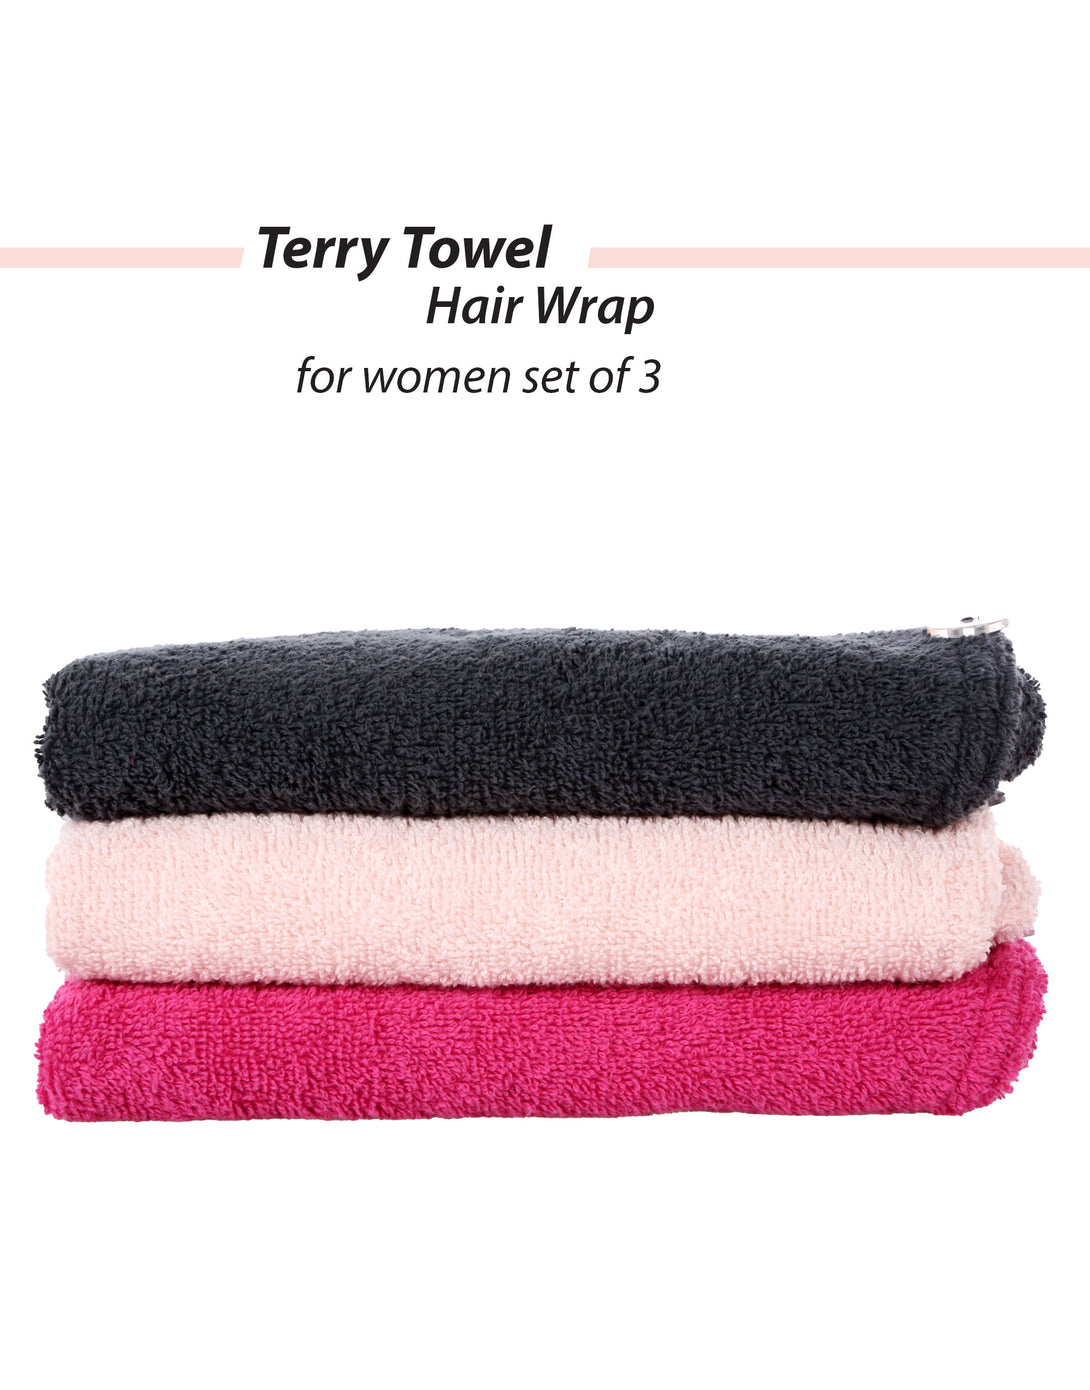 Cotton hair towel  terry cloth wrap 3 pcs set hair turbans for wet hair Drying Hair Wrap Towels for curly hair women anti frizz